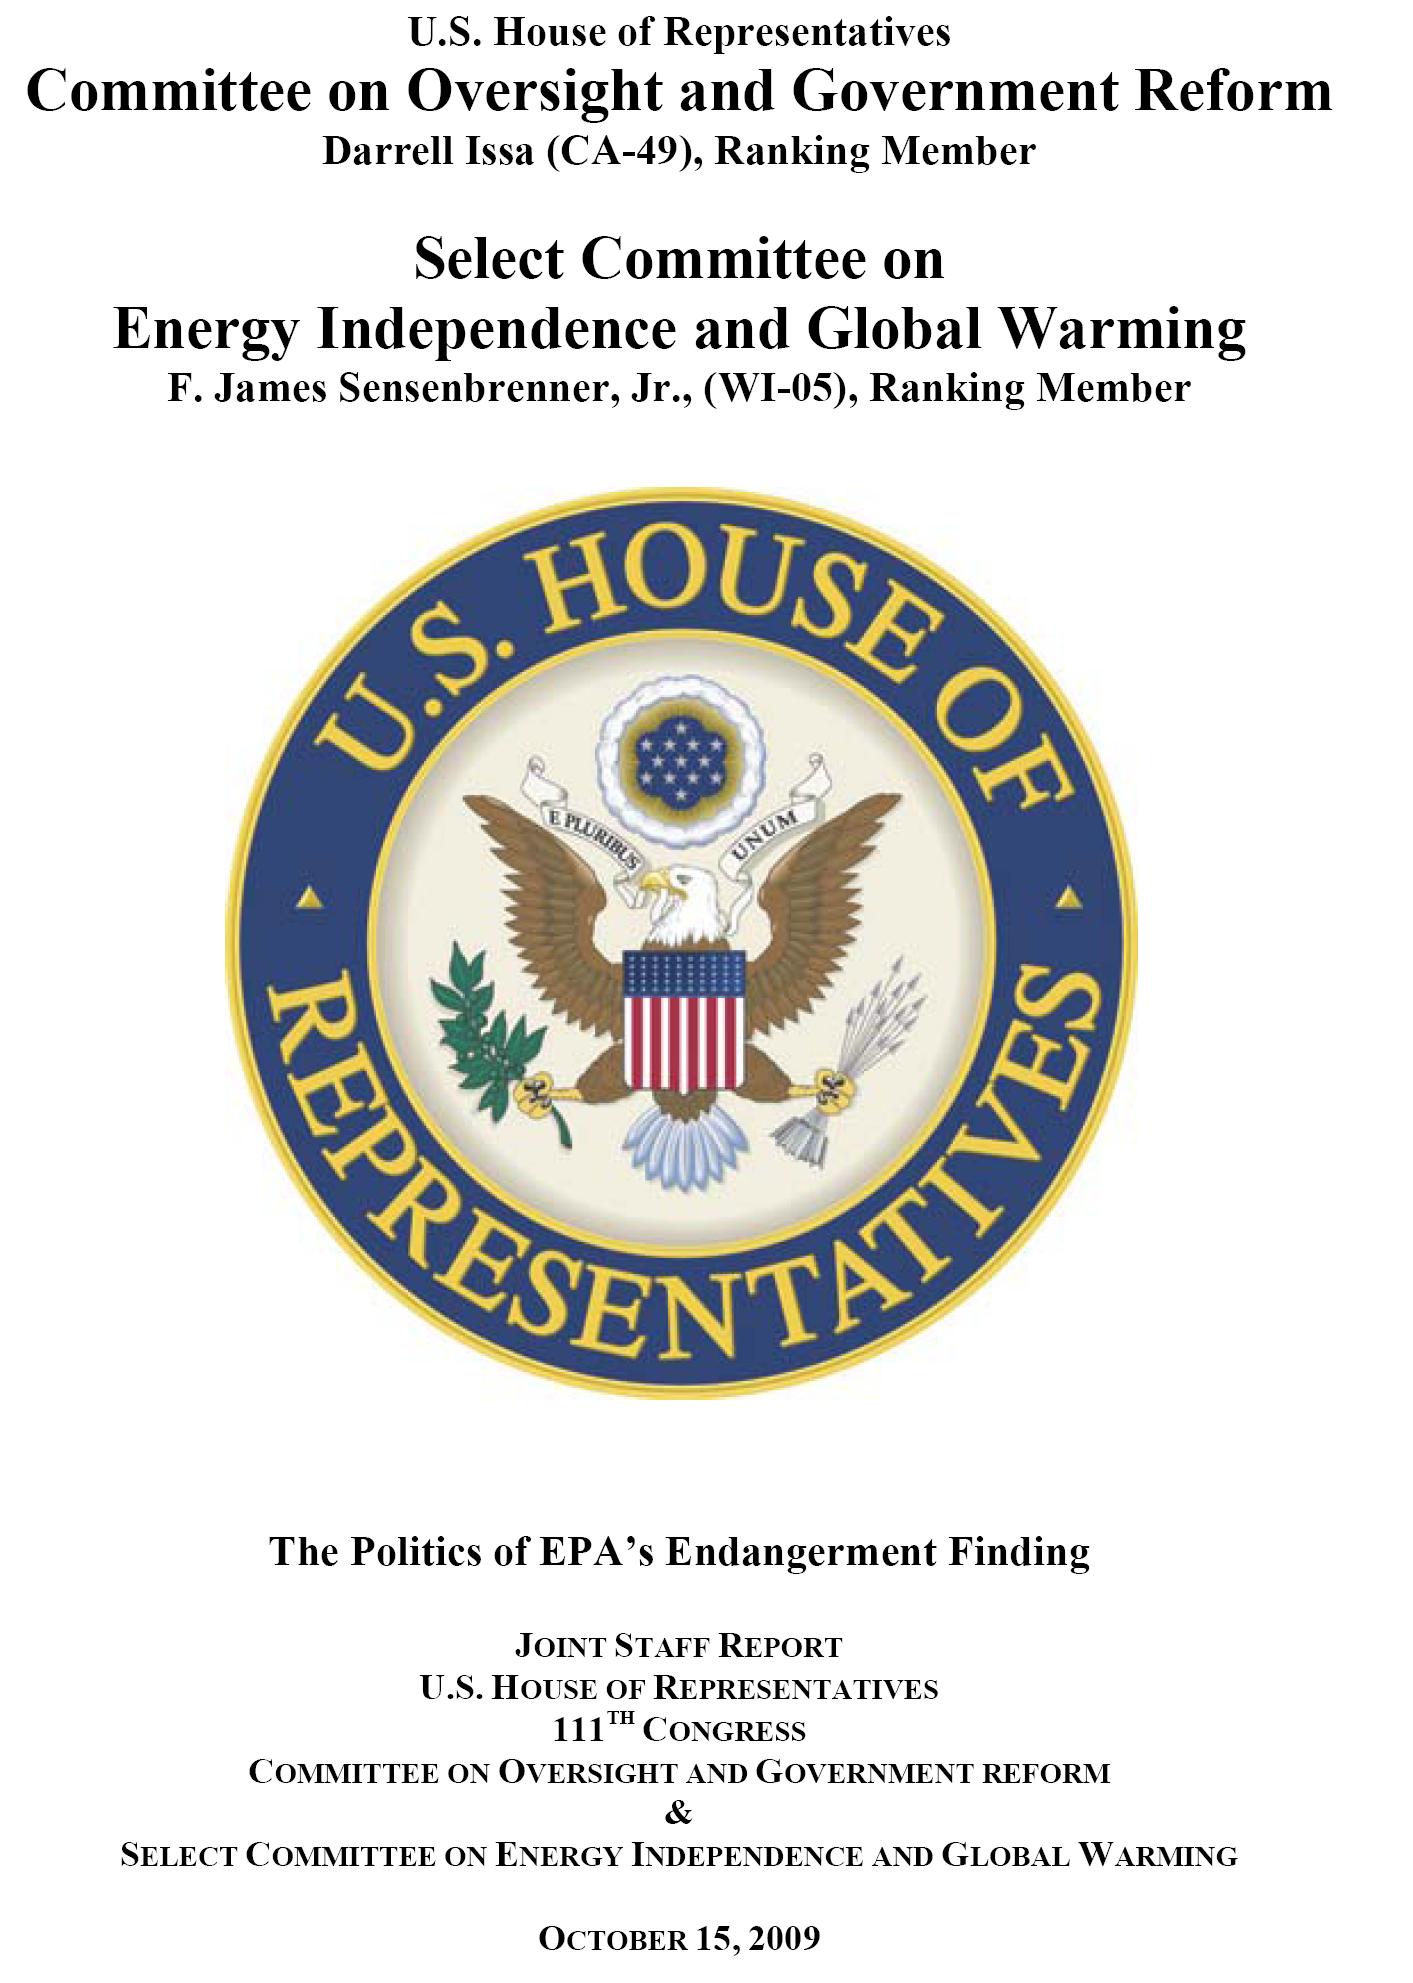 10-15-09_Endangerment_EPA